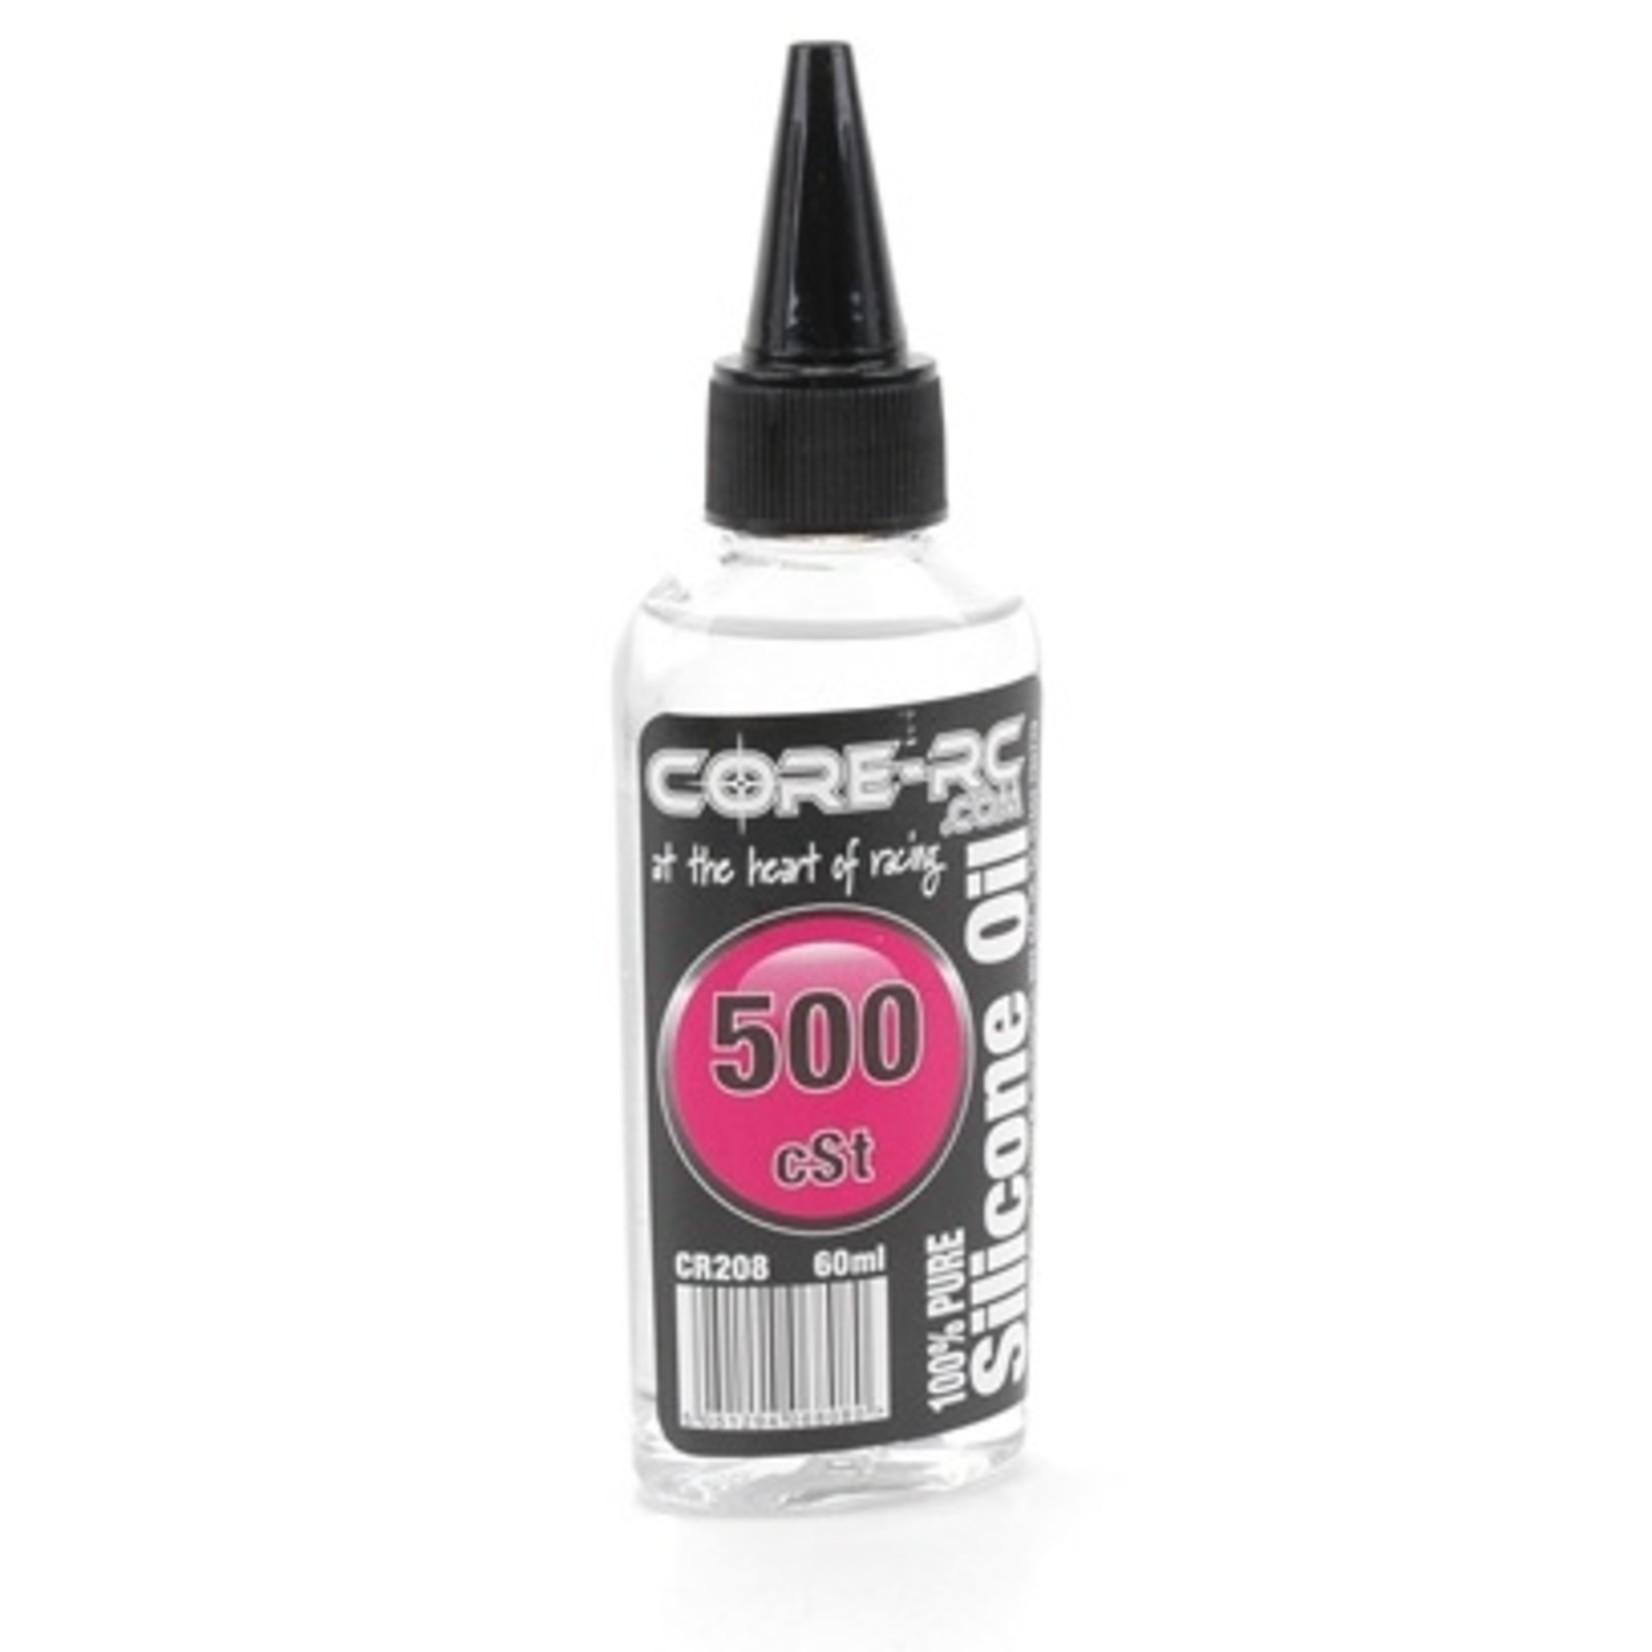 Core RC CORE RC Silicone Oil - 500cSt - 60ml